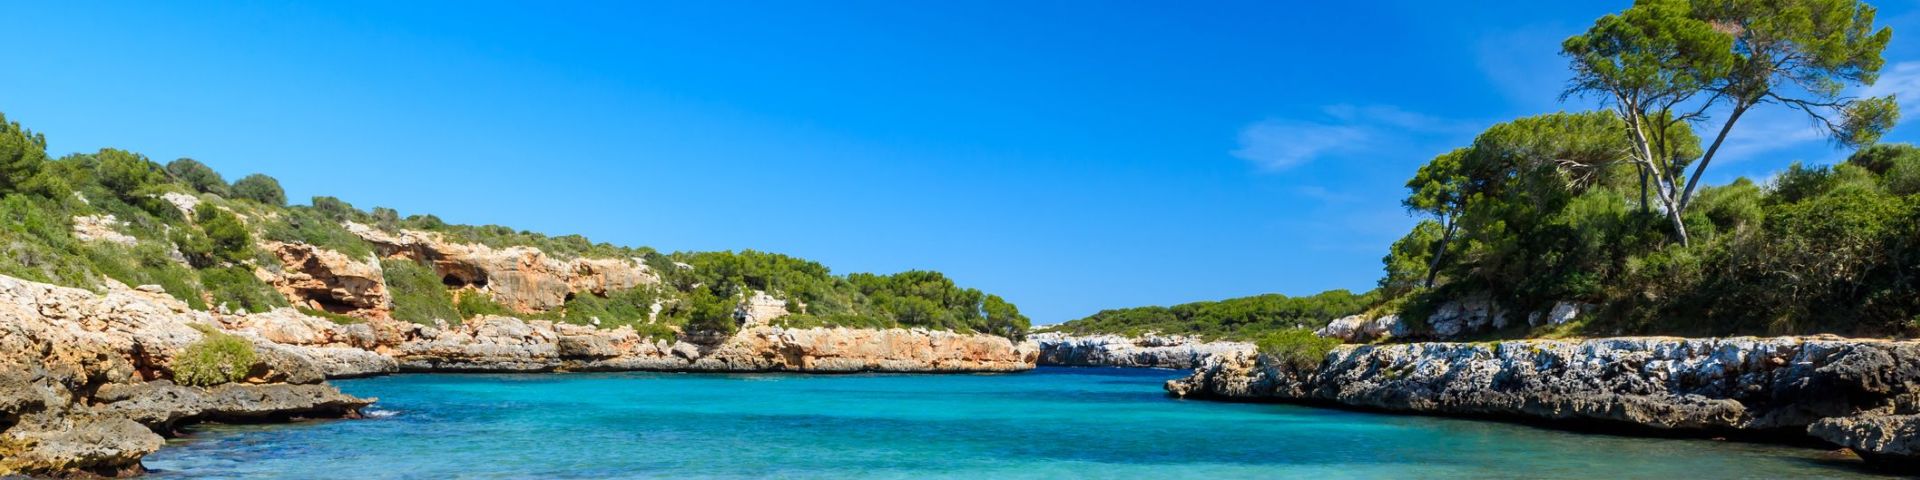 Sommerurlaub auf Mallorca